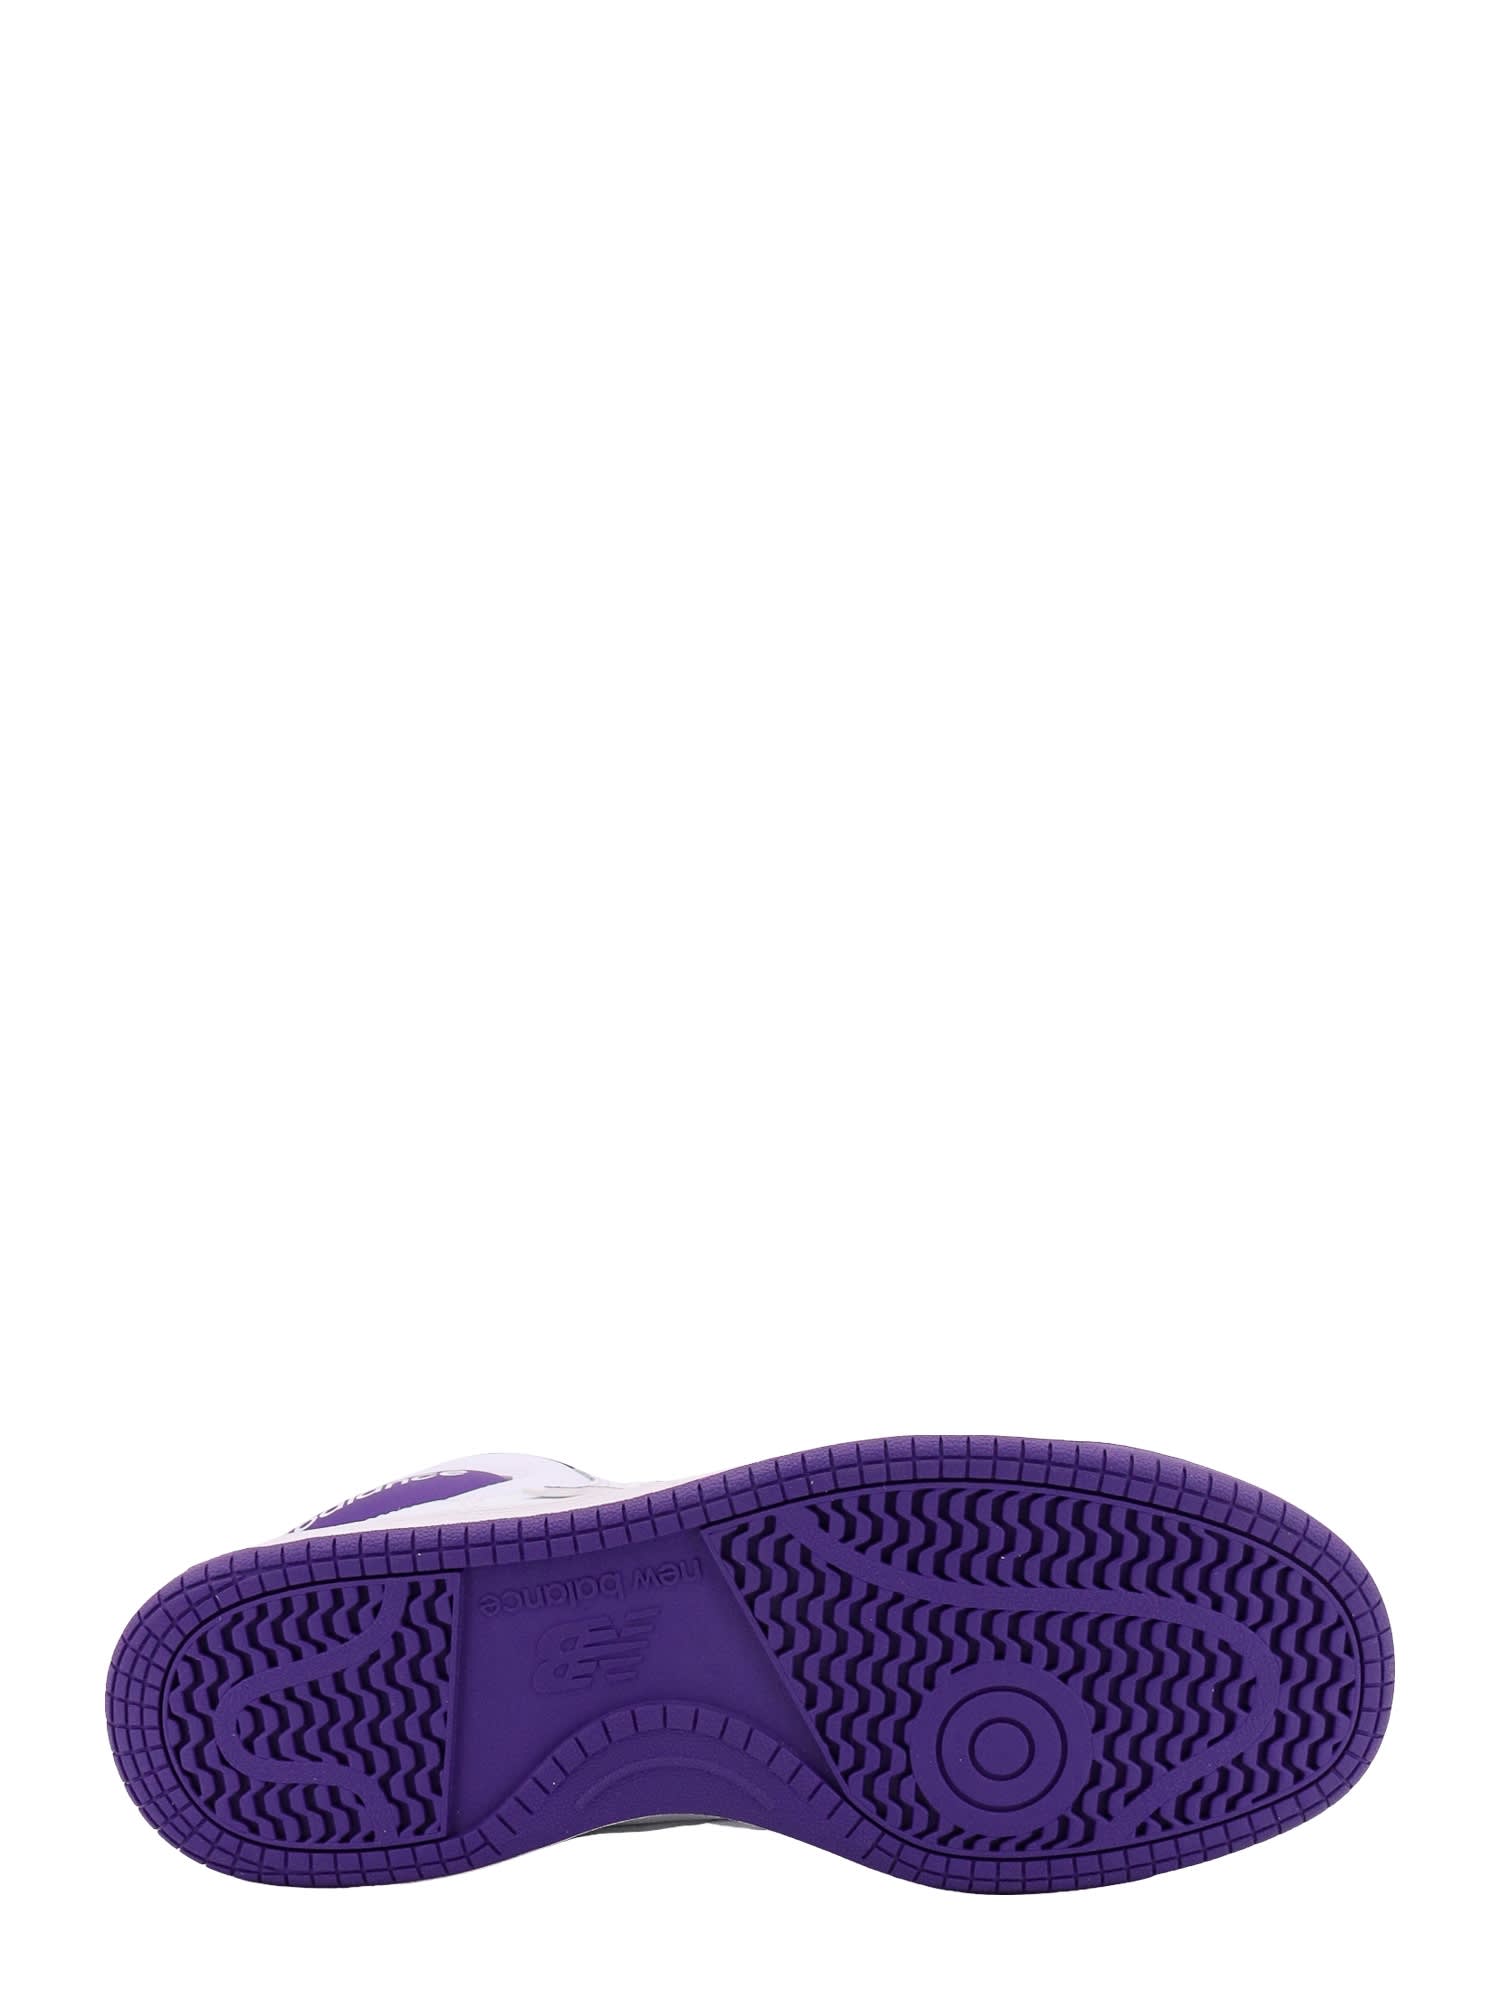 Shop New Balance 480 Sneakers In Purple